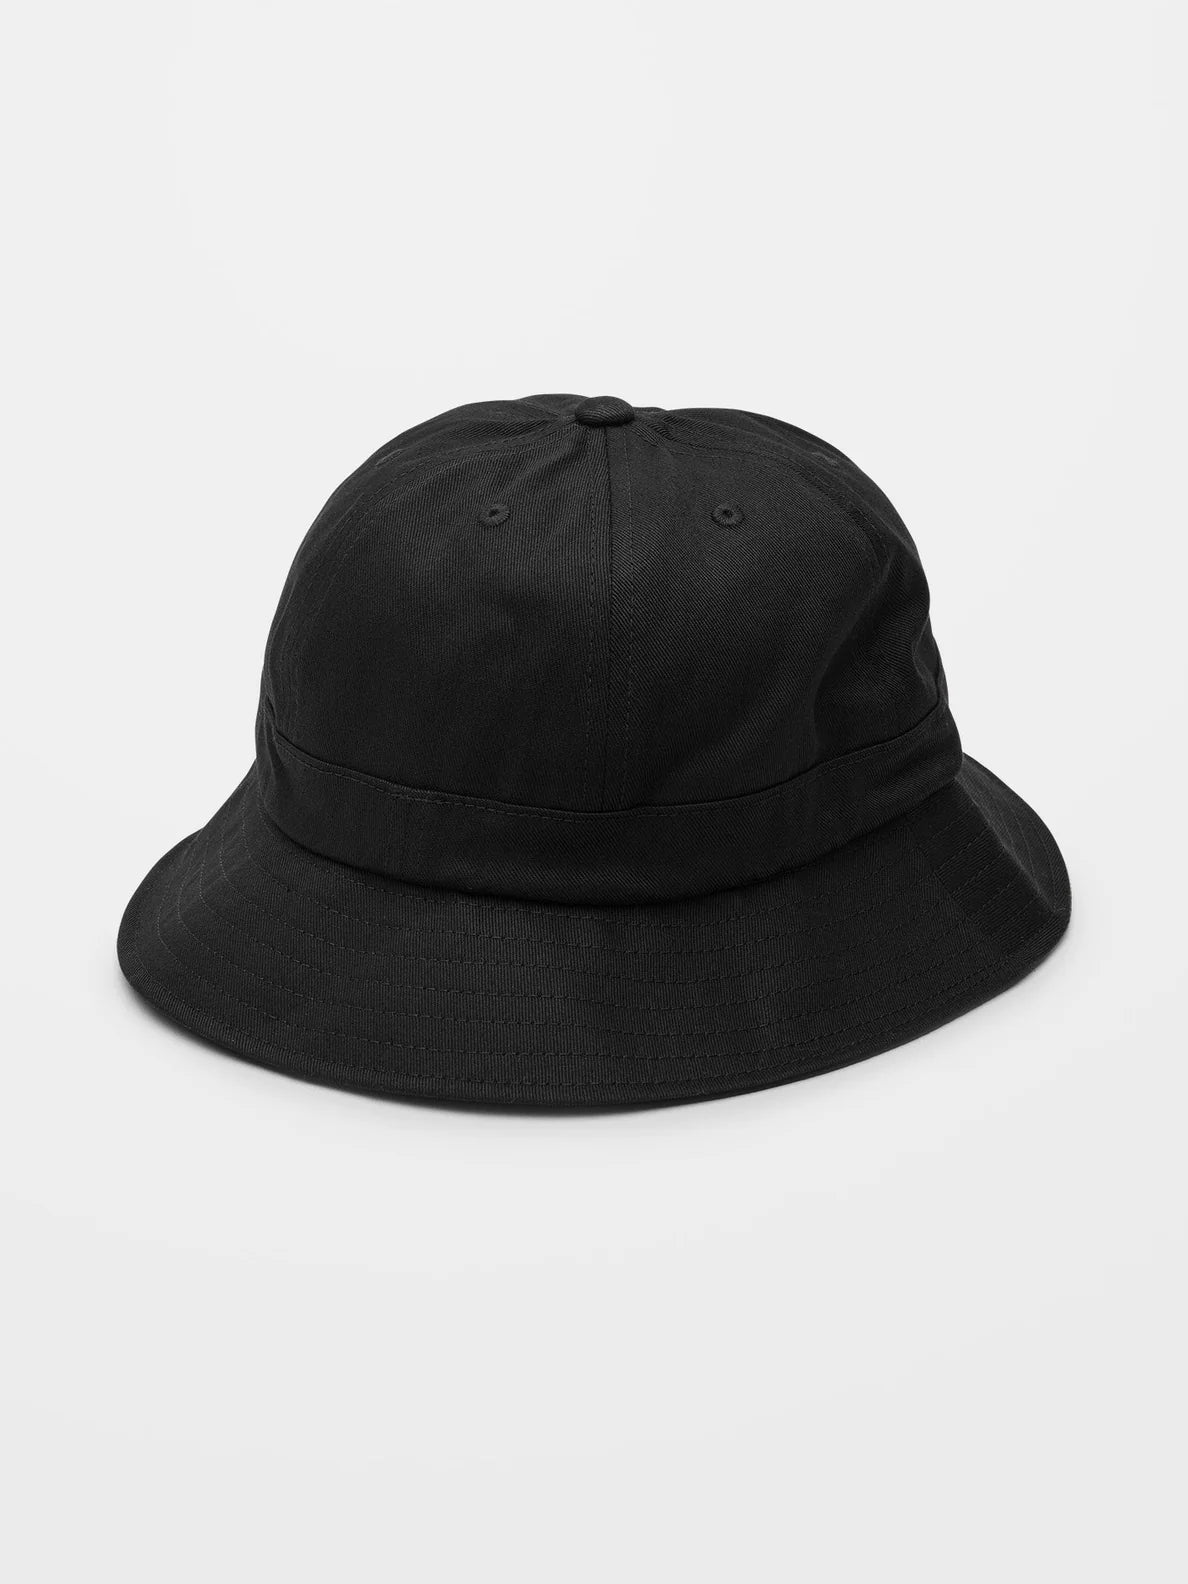 Gorro Volcom Swirley Bucket Hat Black